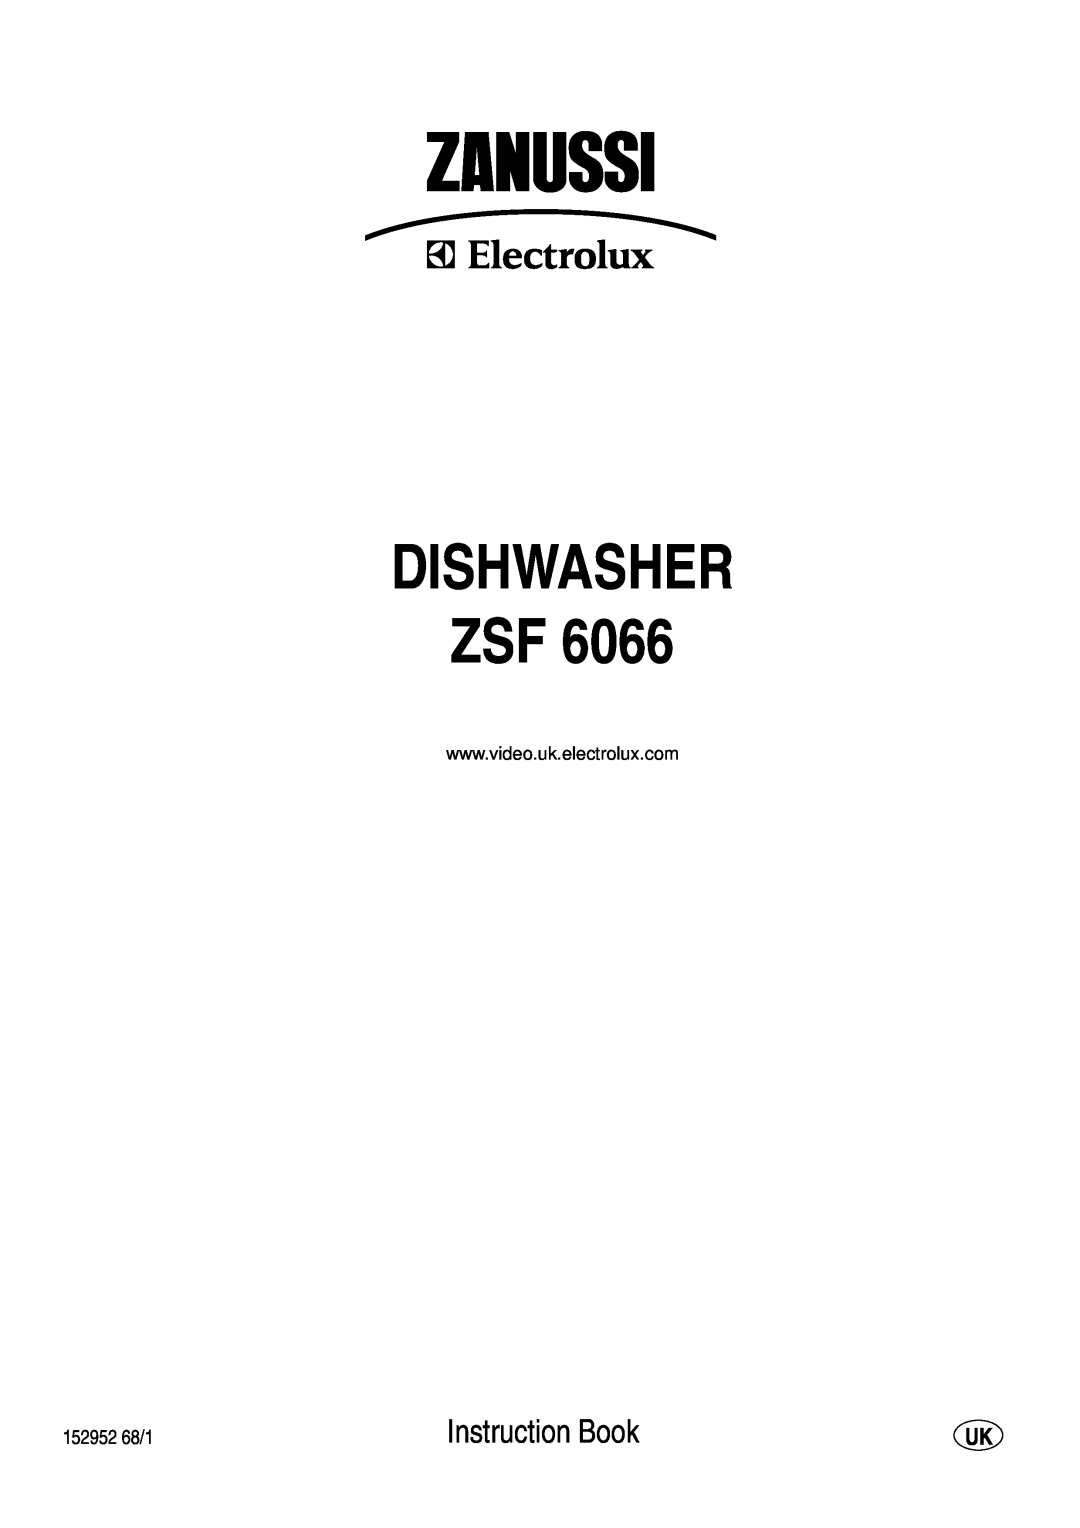 Zanussi ZSF 6066 manual Dishwasher Zsf, Instruction Book, 152952 68/1 